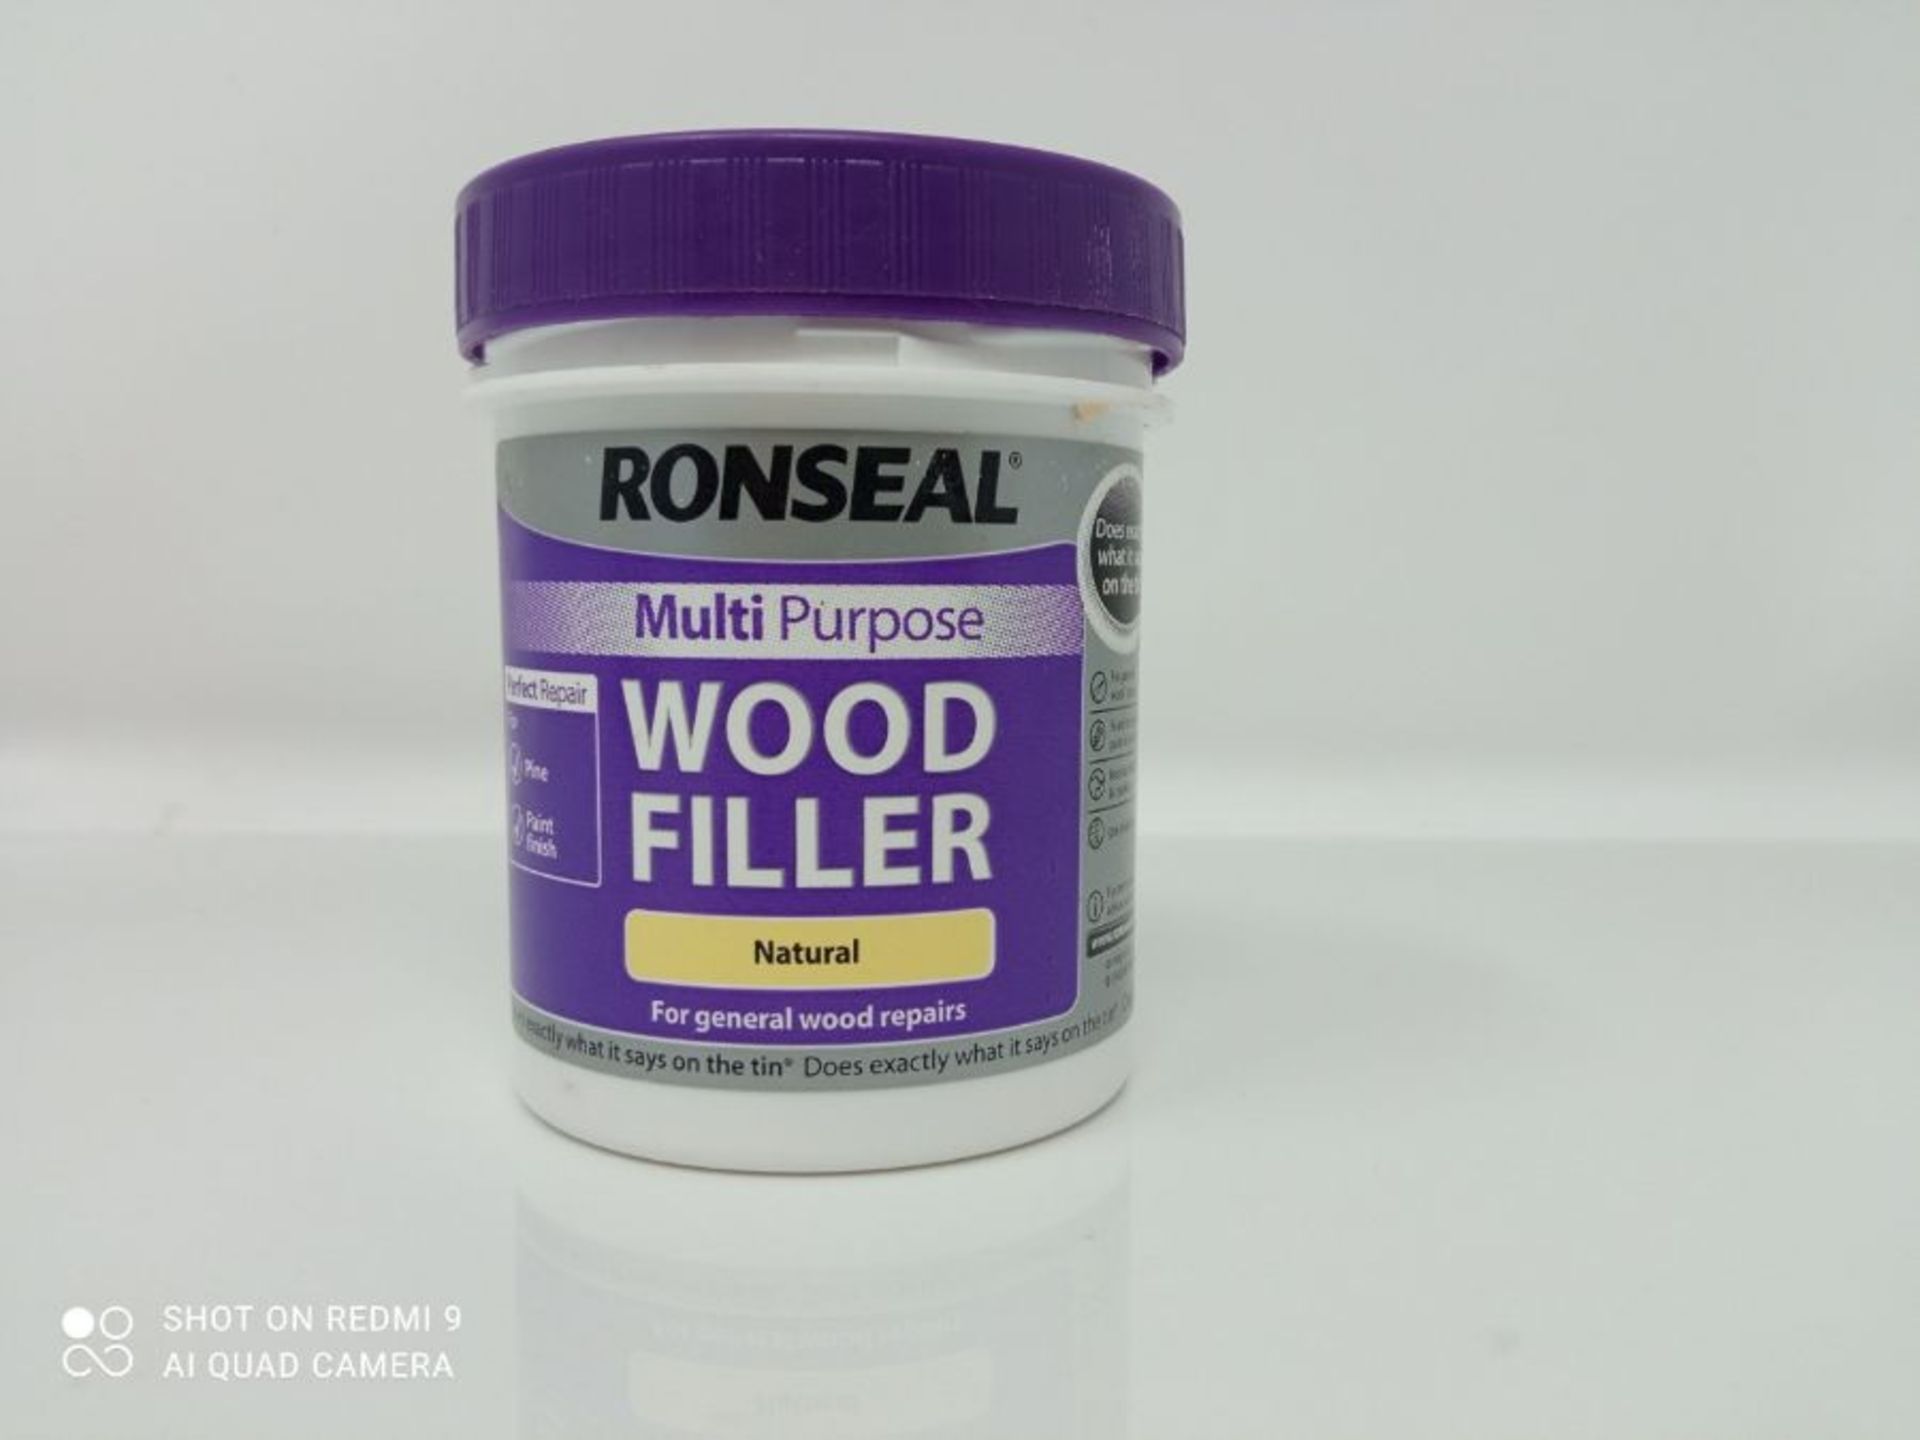 RONSEAL 34735 Ronseal Multi-Purpose Wood Filler - Natural, Purple, 250g - Image 2 of 2